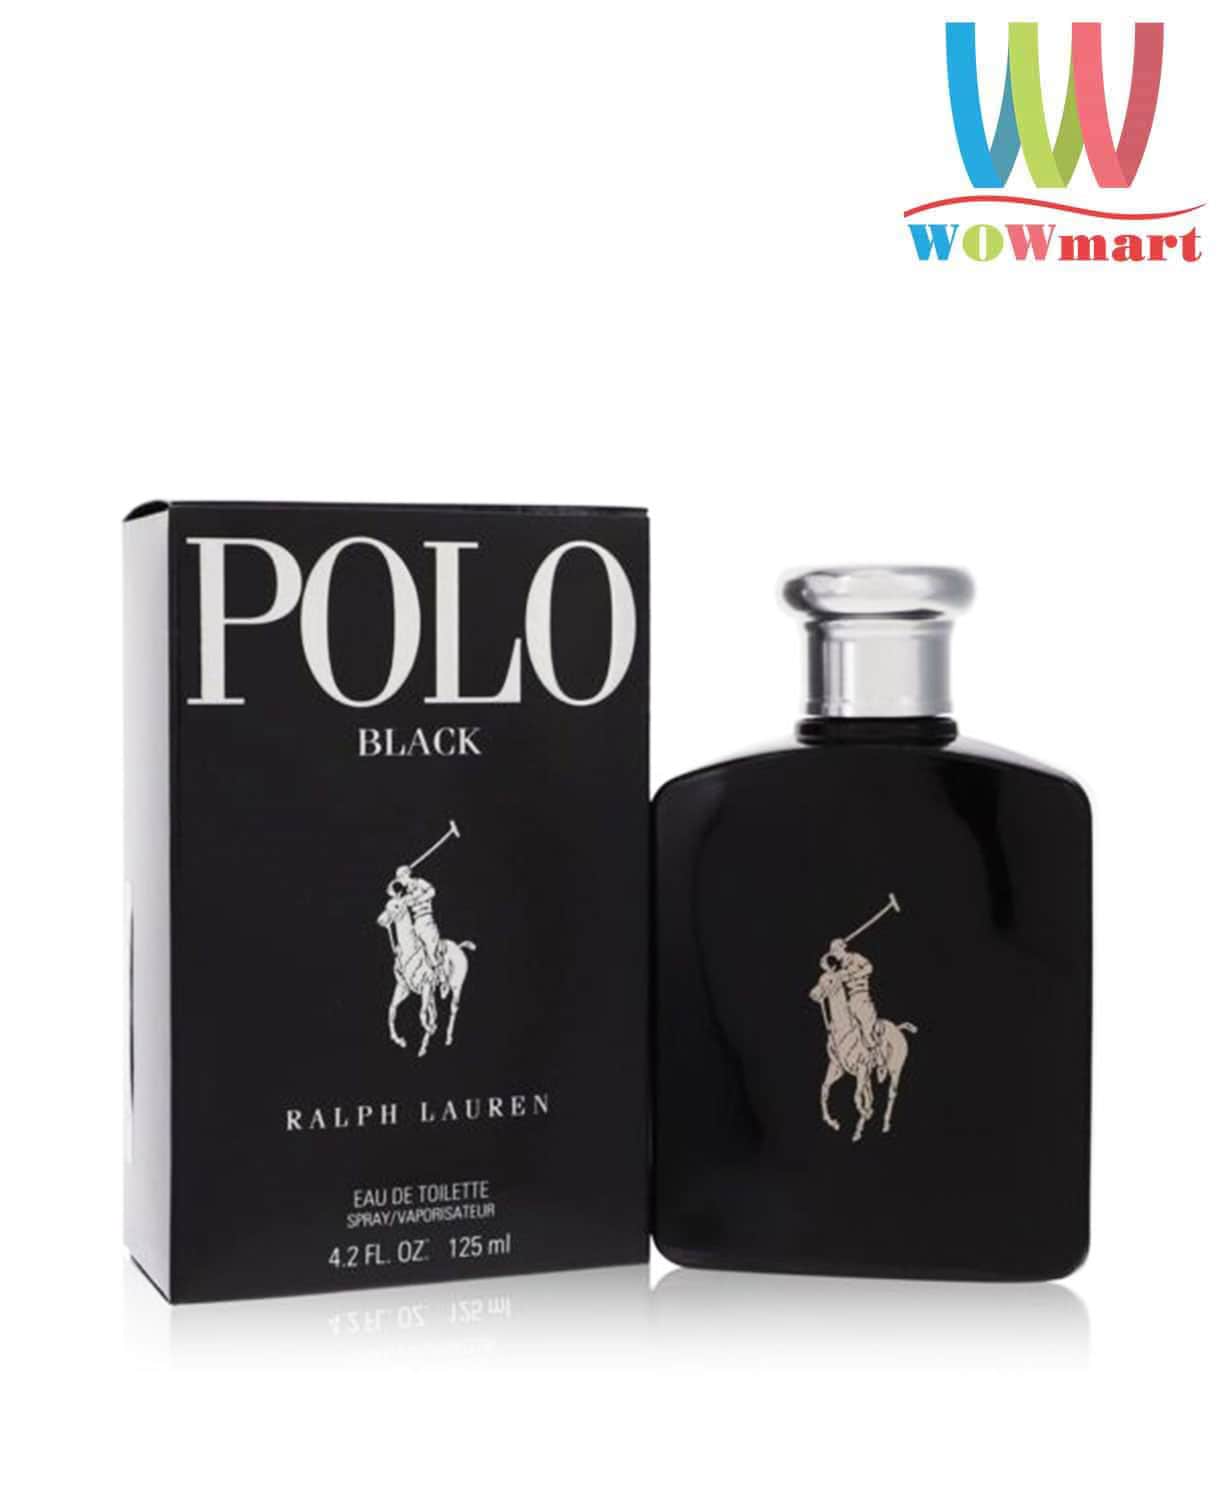 Nước hoa nam Polo Black Ralph Lauren Eau De Toilette 125ml – Wowmart VN |  100% hàng ngoại nhập